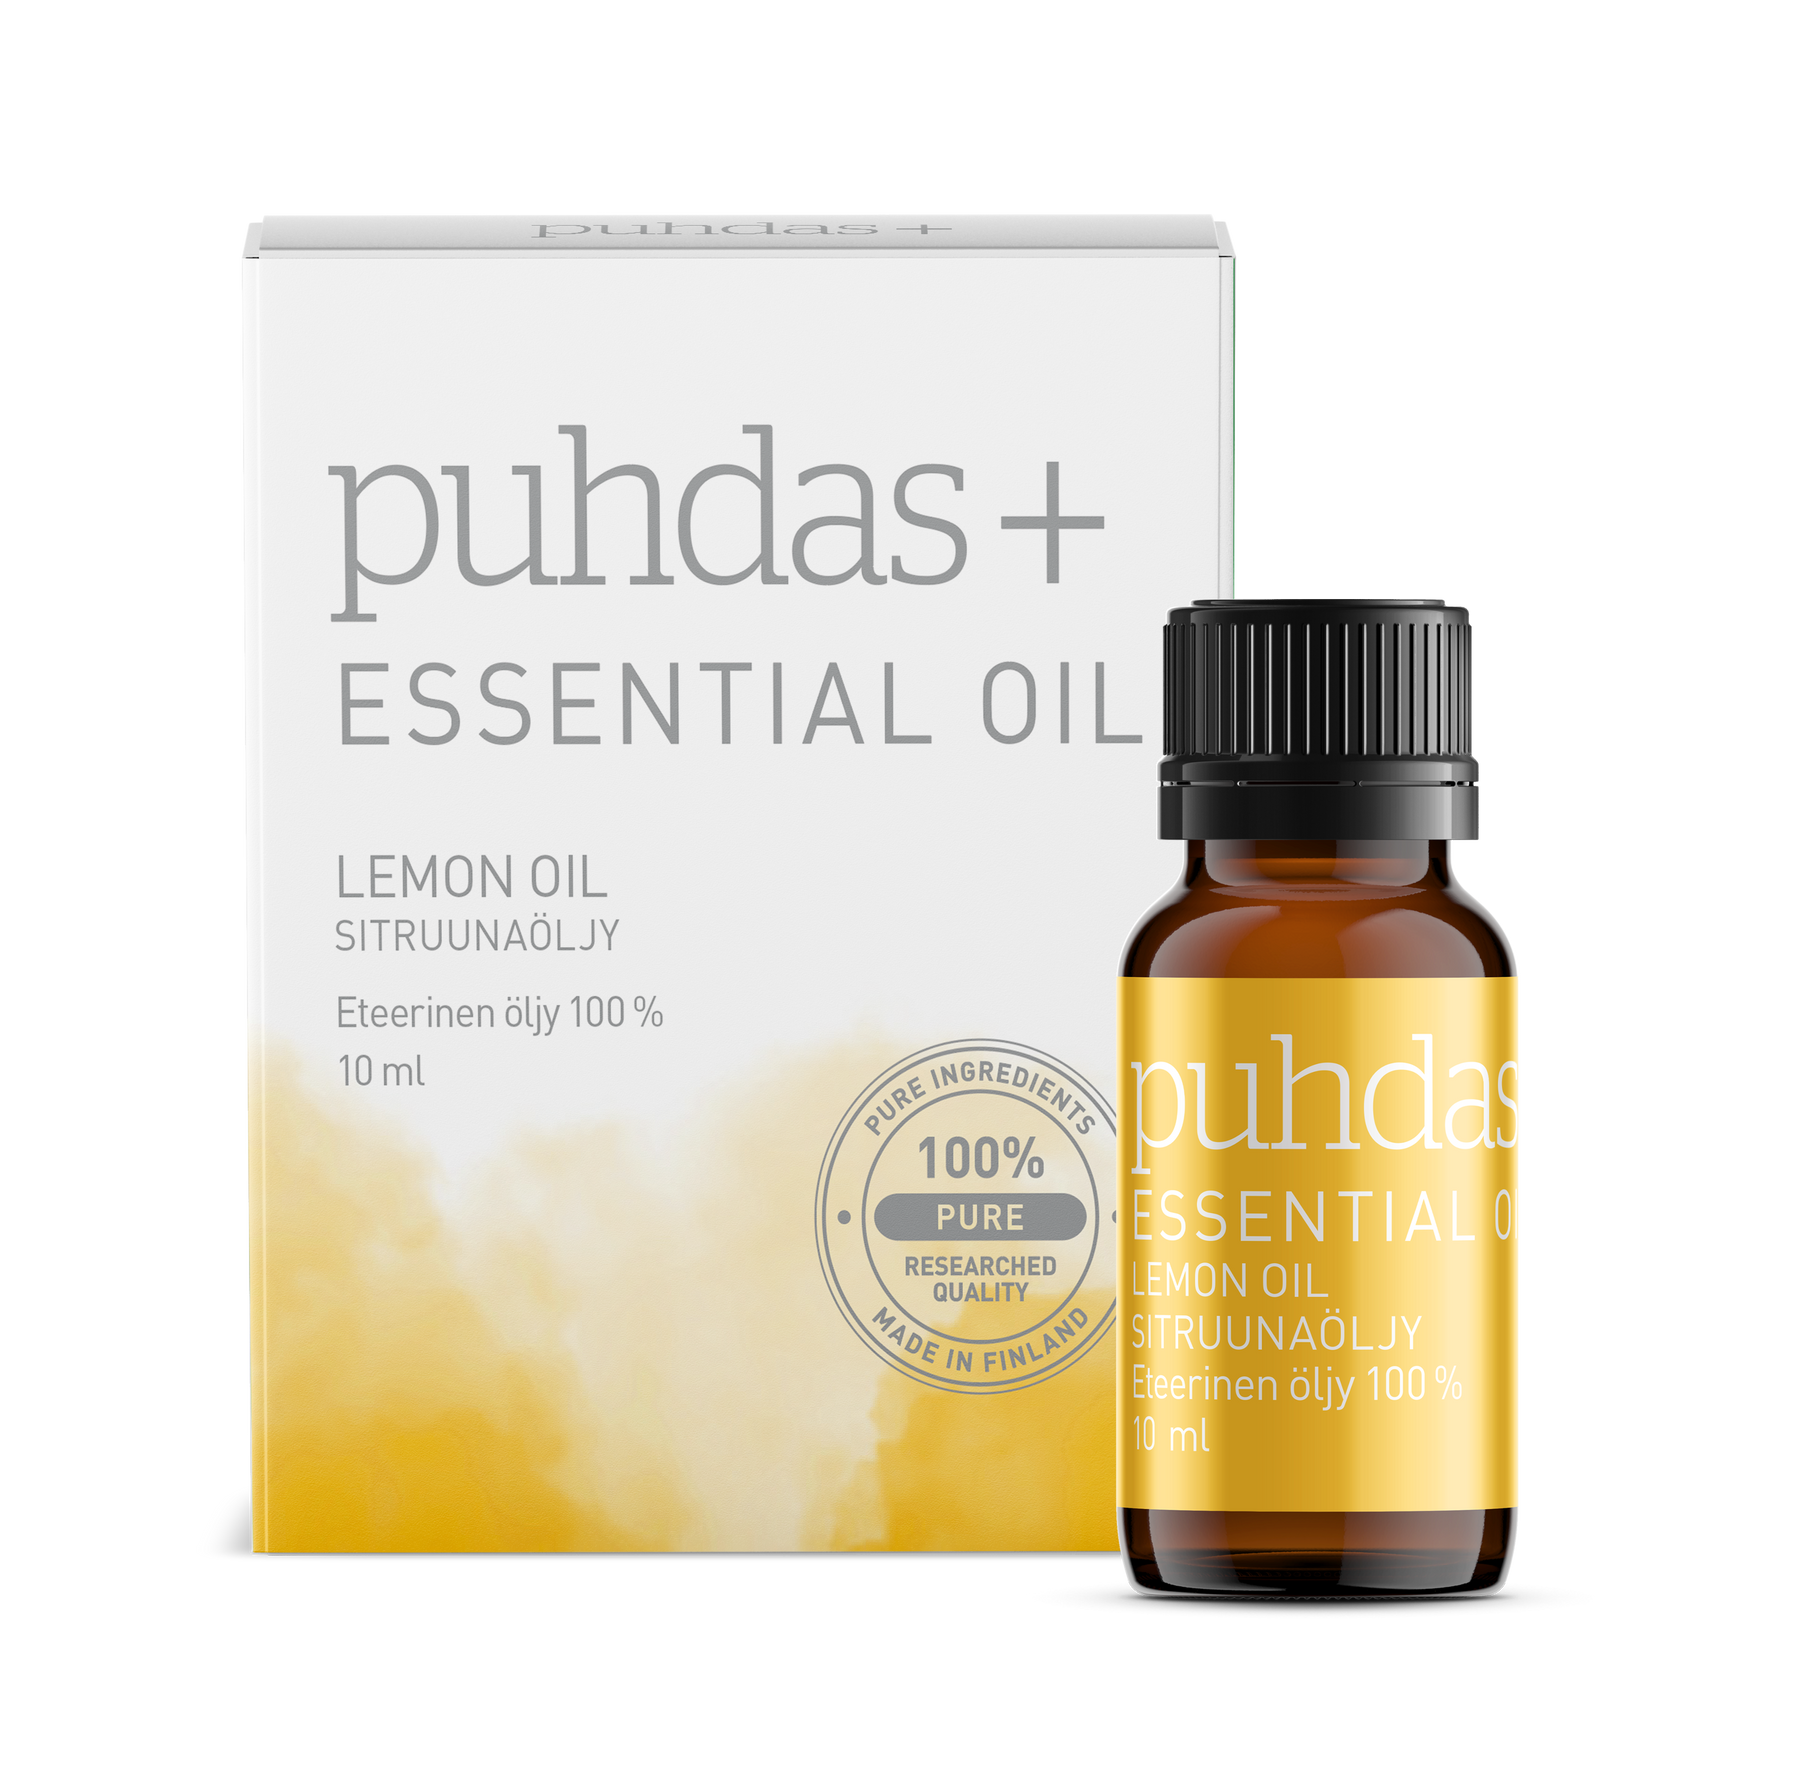 Puhdas+ Essential Oil Lemon Oil - Sitruunaöljy 10 ml